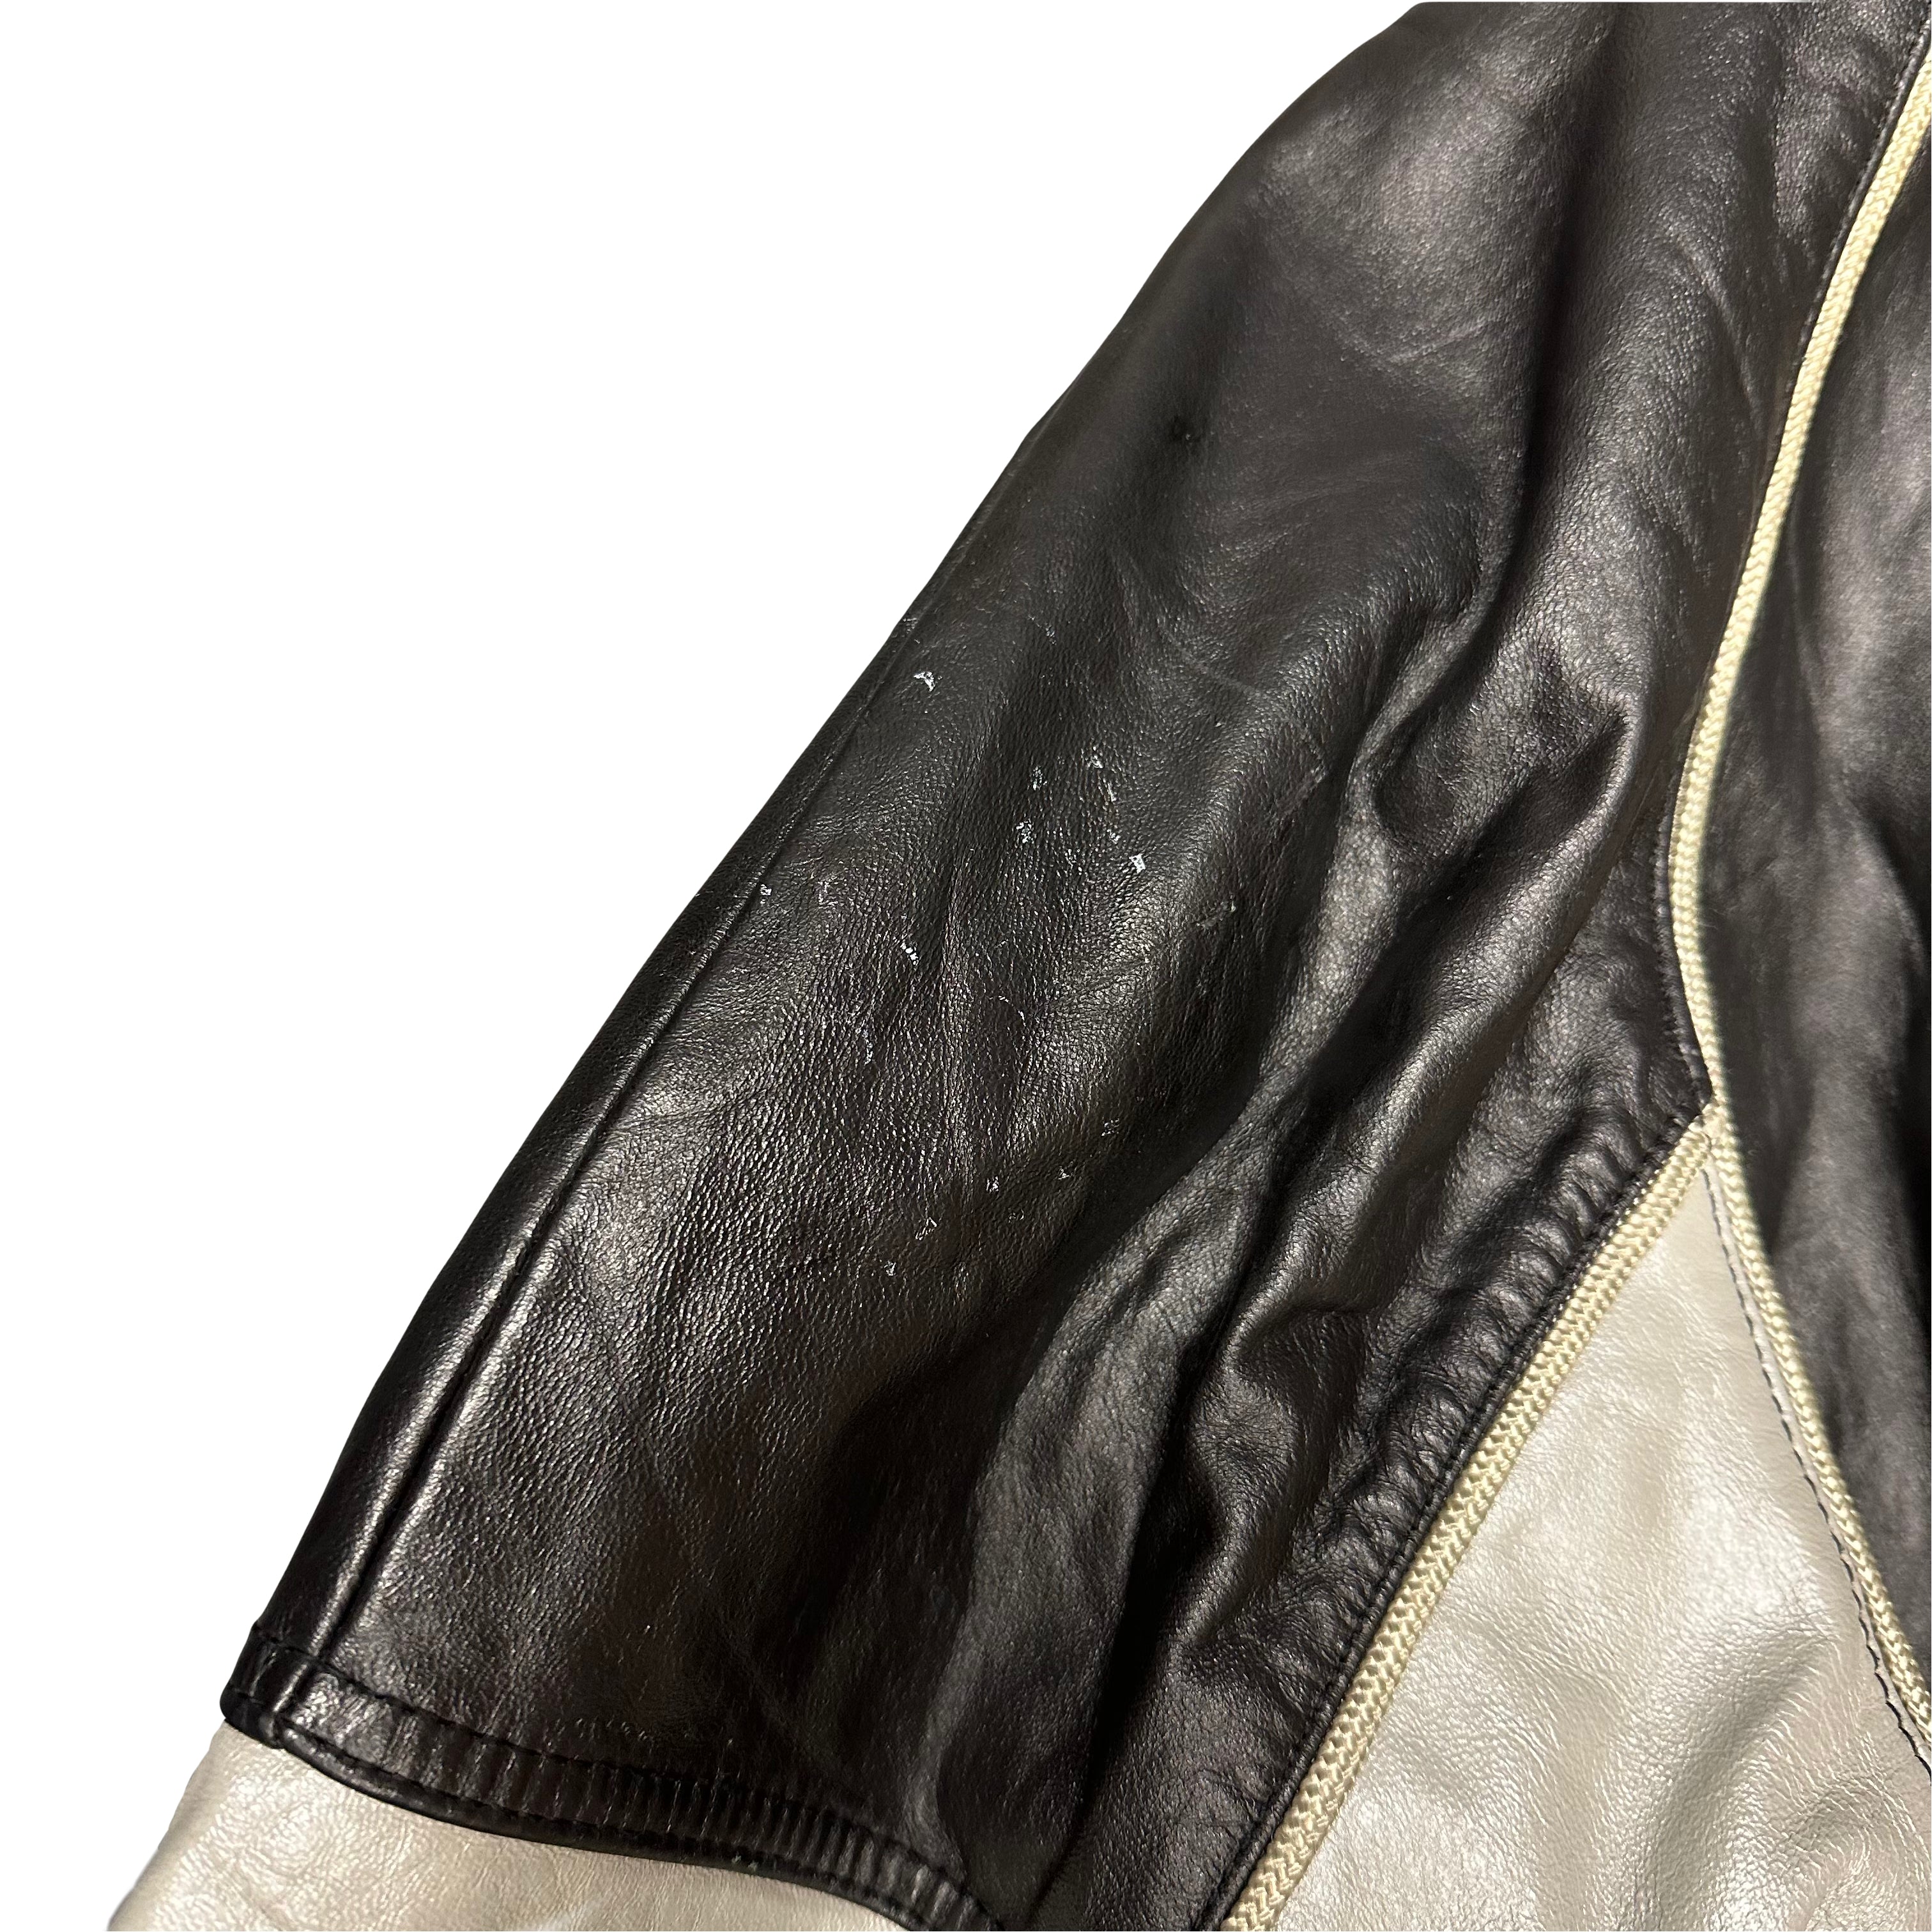 ARCHIVE Avirex Dragon Leather Jacket ( XL )